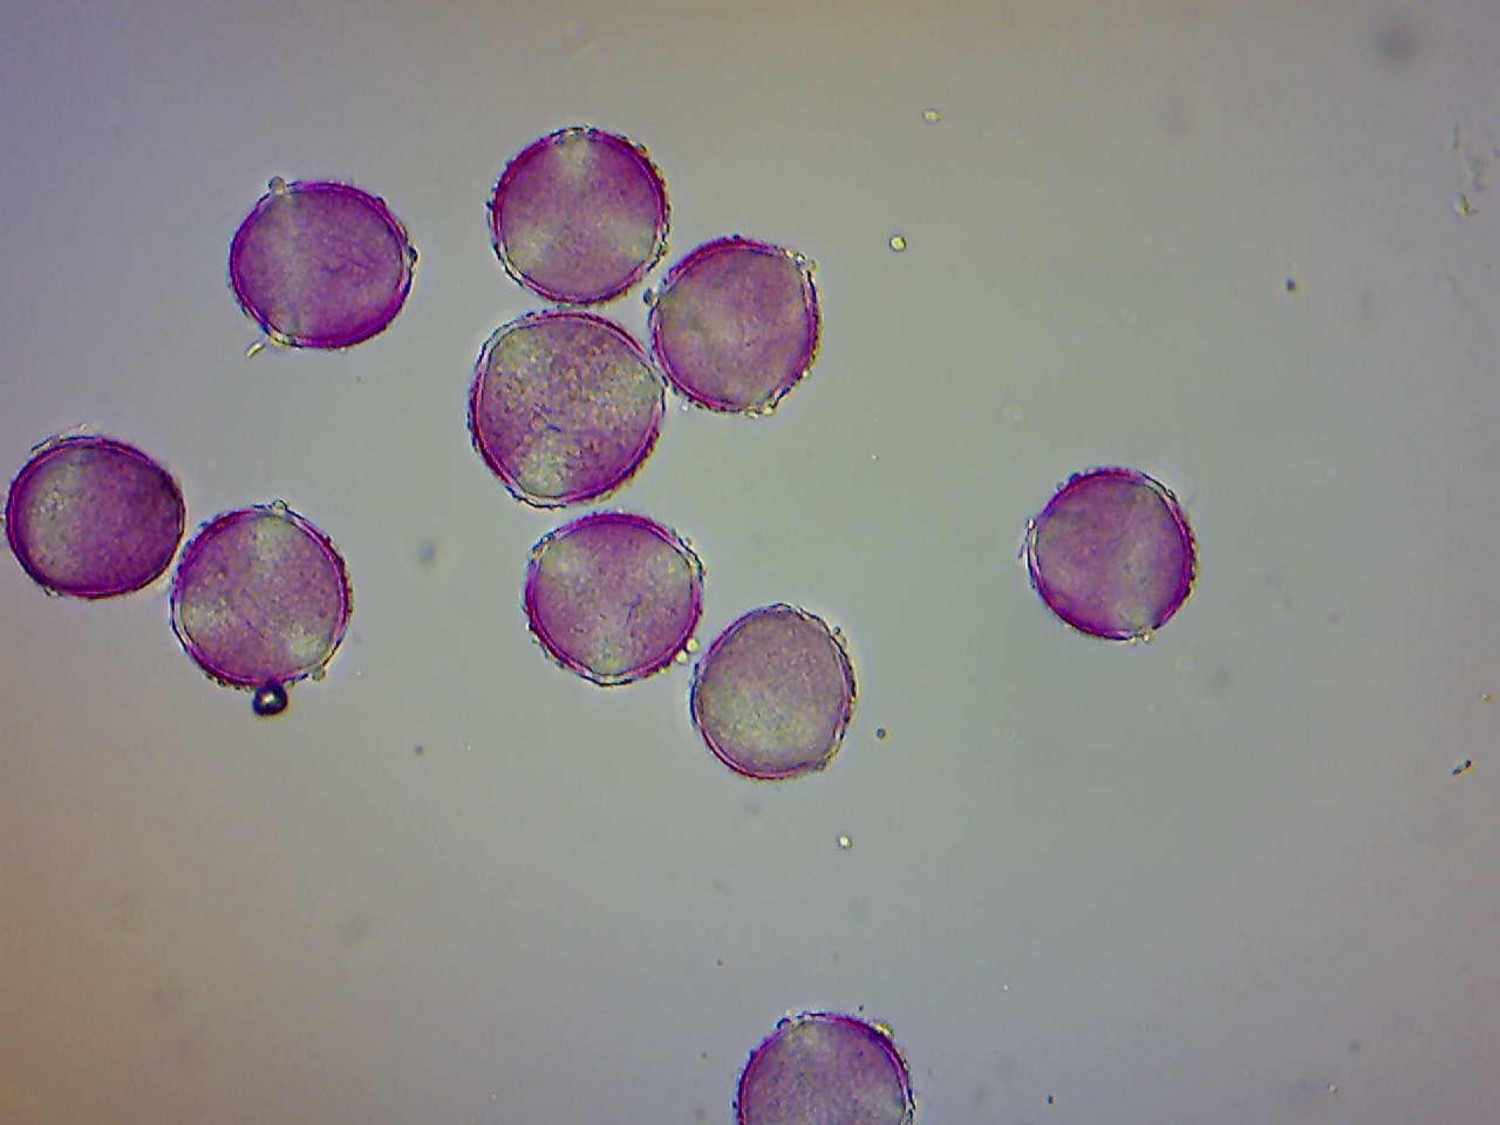 Maple / Box Elder Pollen Under the Microscope